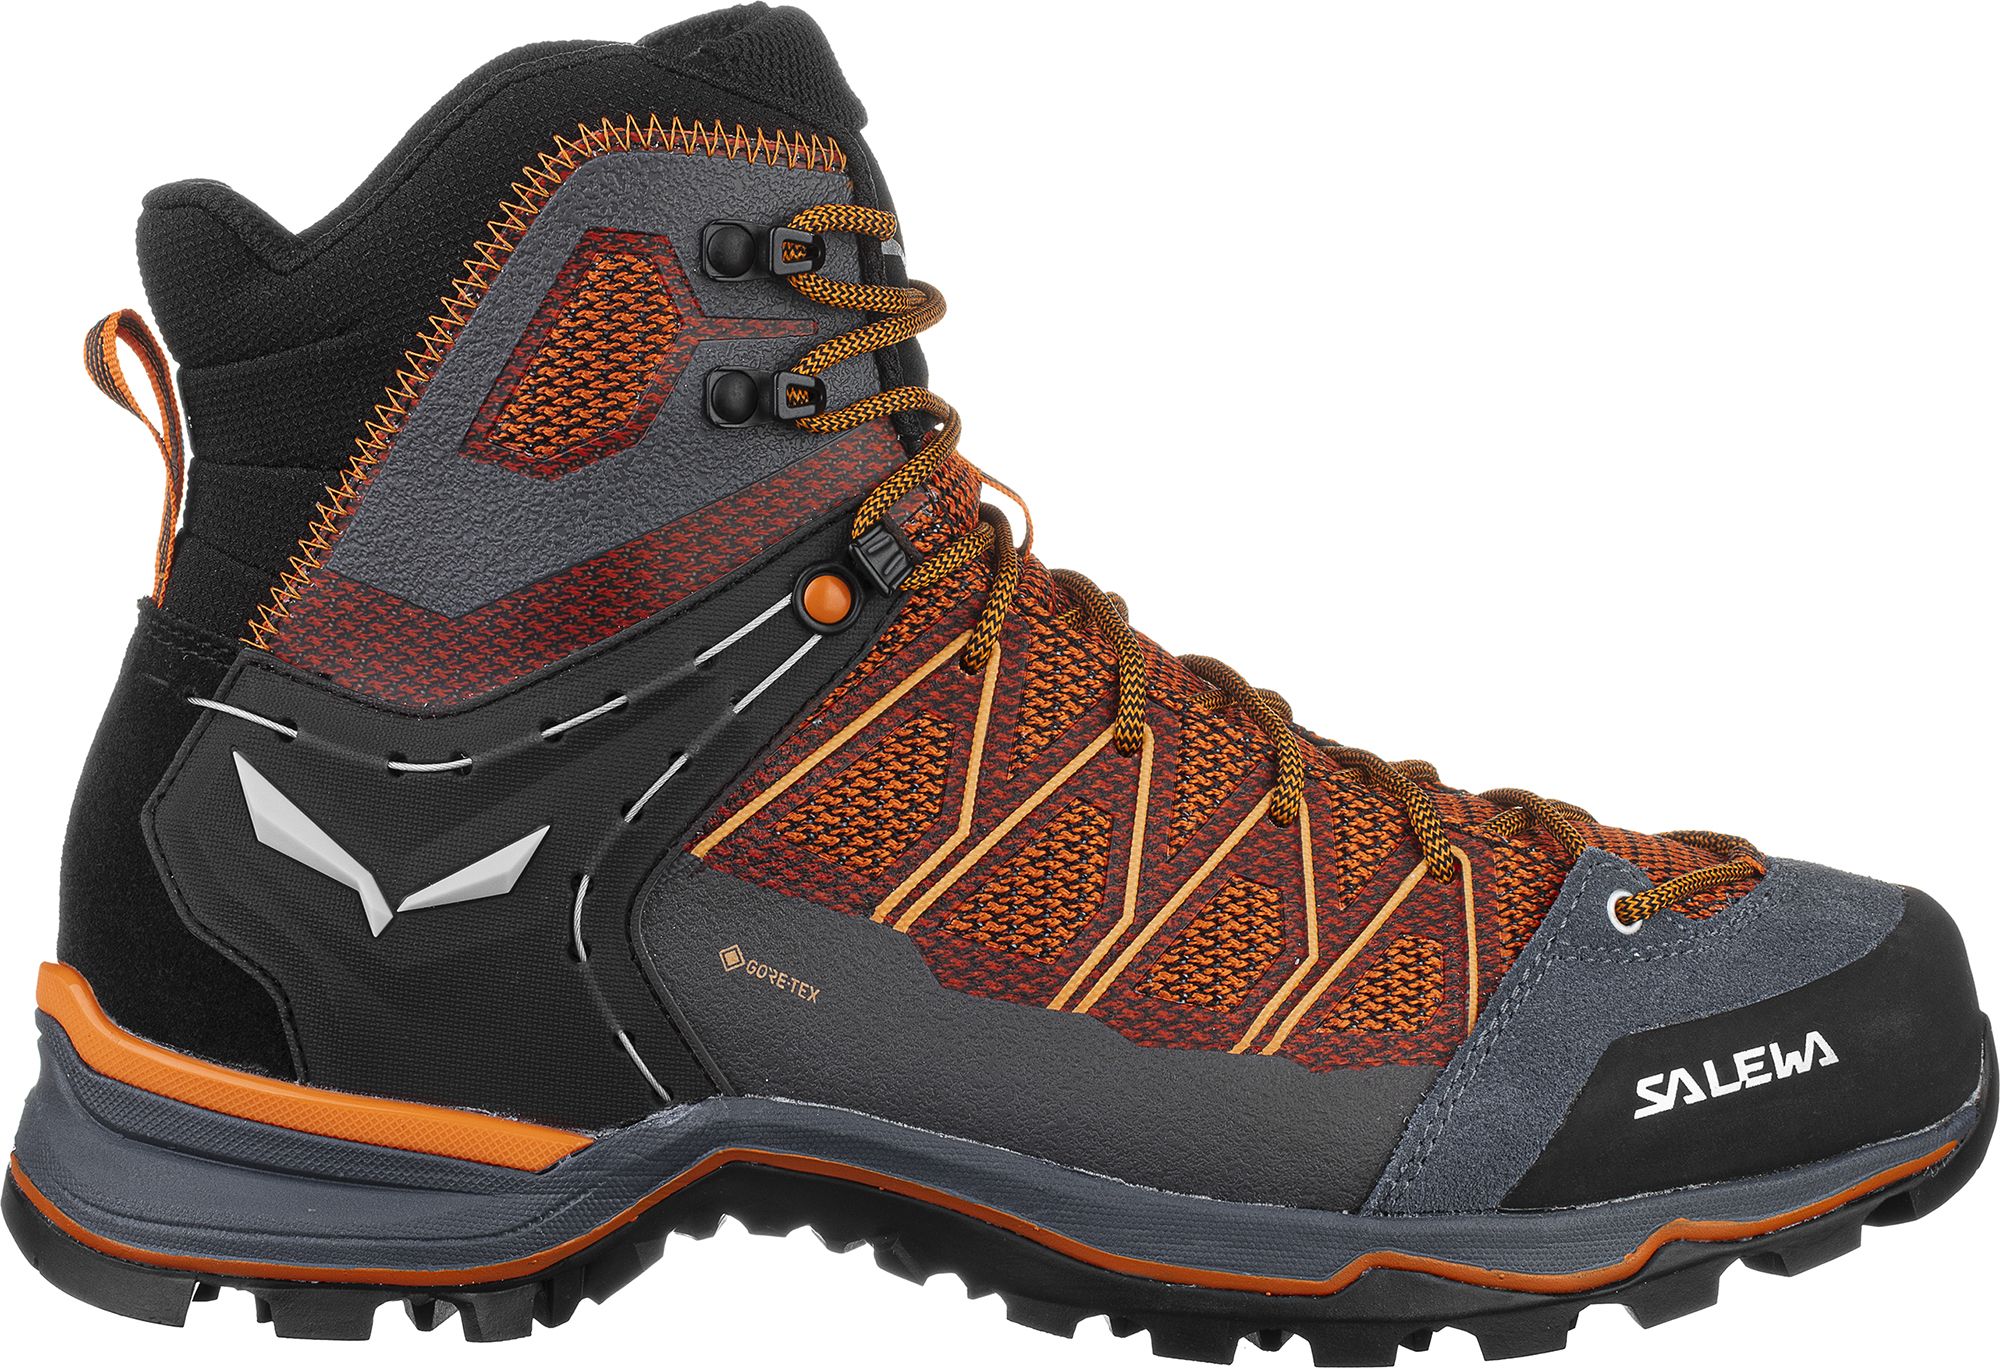 Photos - Trekking Shoes Salewa Men's Mountain Trainer Lite Mid GORE-TEX Hiking Boots, Size 14, Bla 